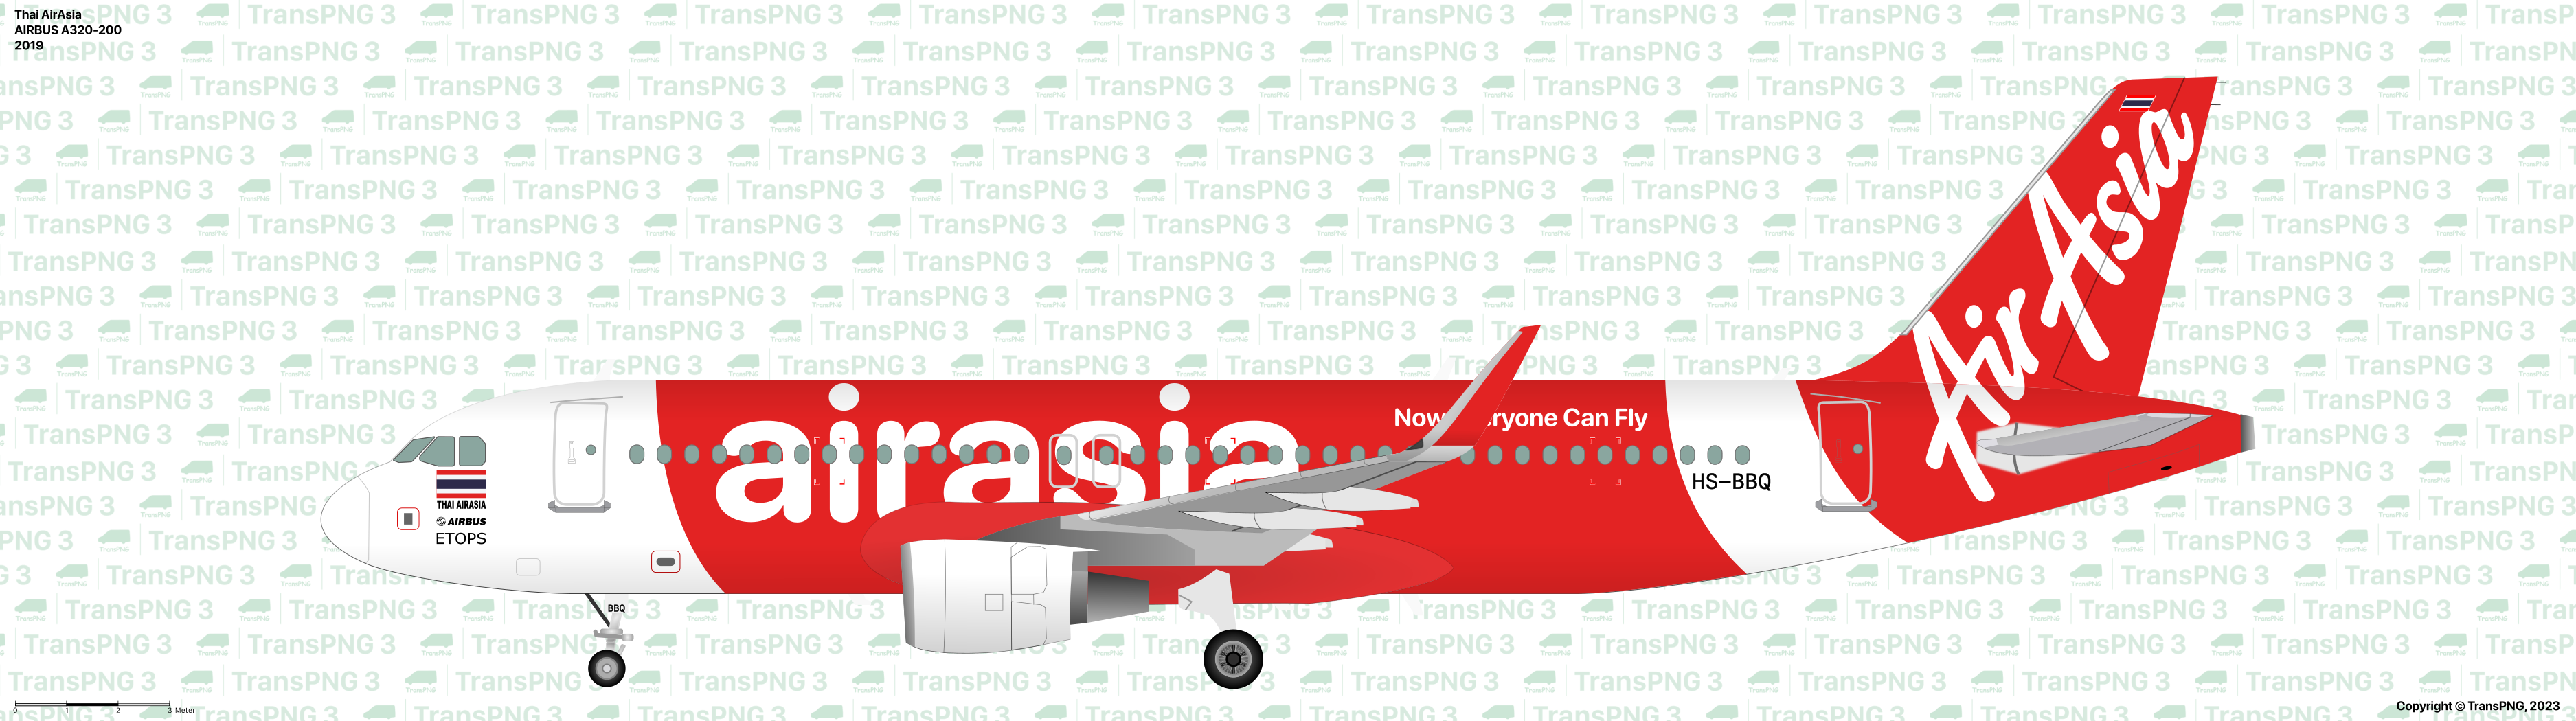 TransPNG | 世界中の様々な乗り物の優れたイラストを共有する - 旅客機 53278940943_1f4699a2dd_o